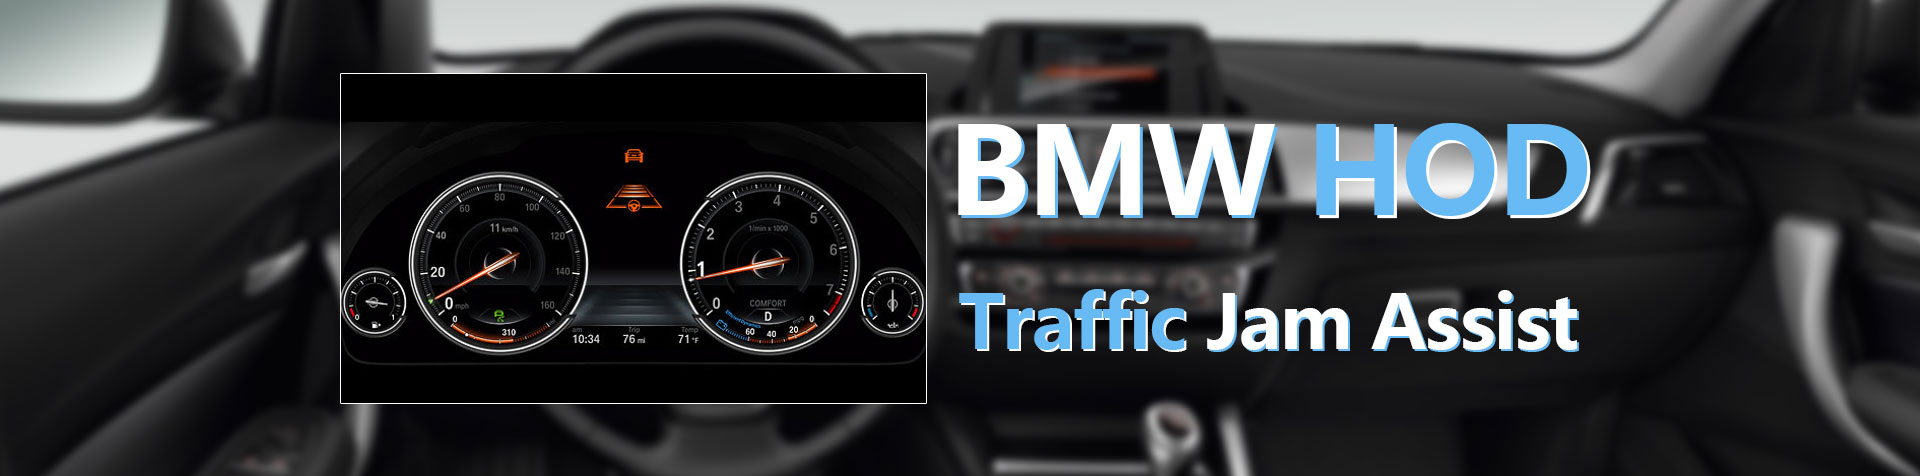 BMW HOD Emulator-Traffic Jam Assist(TJA)